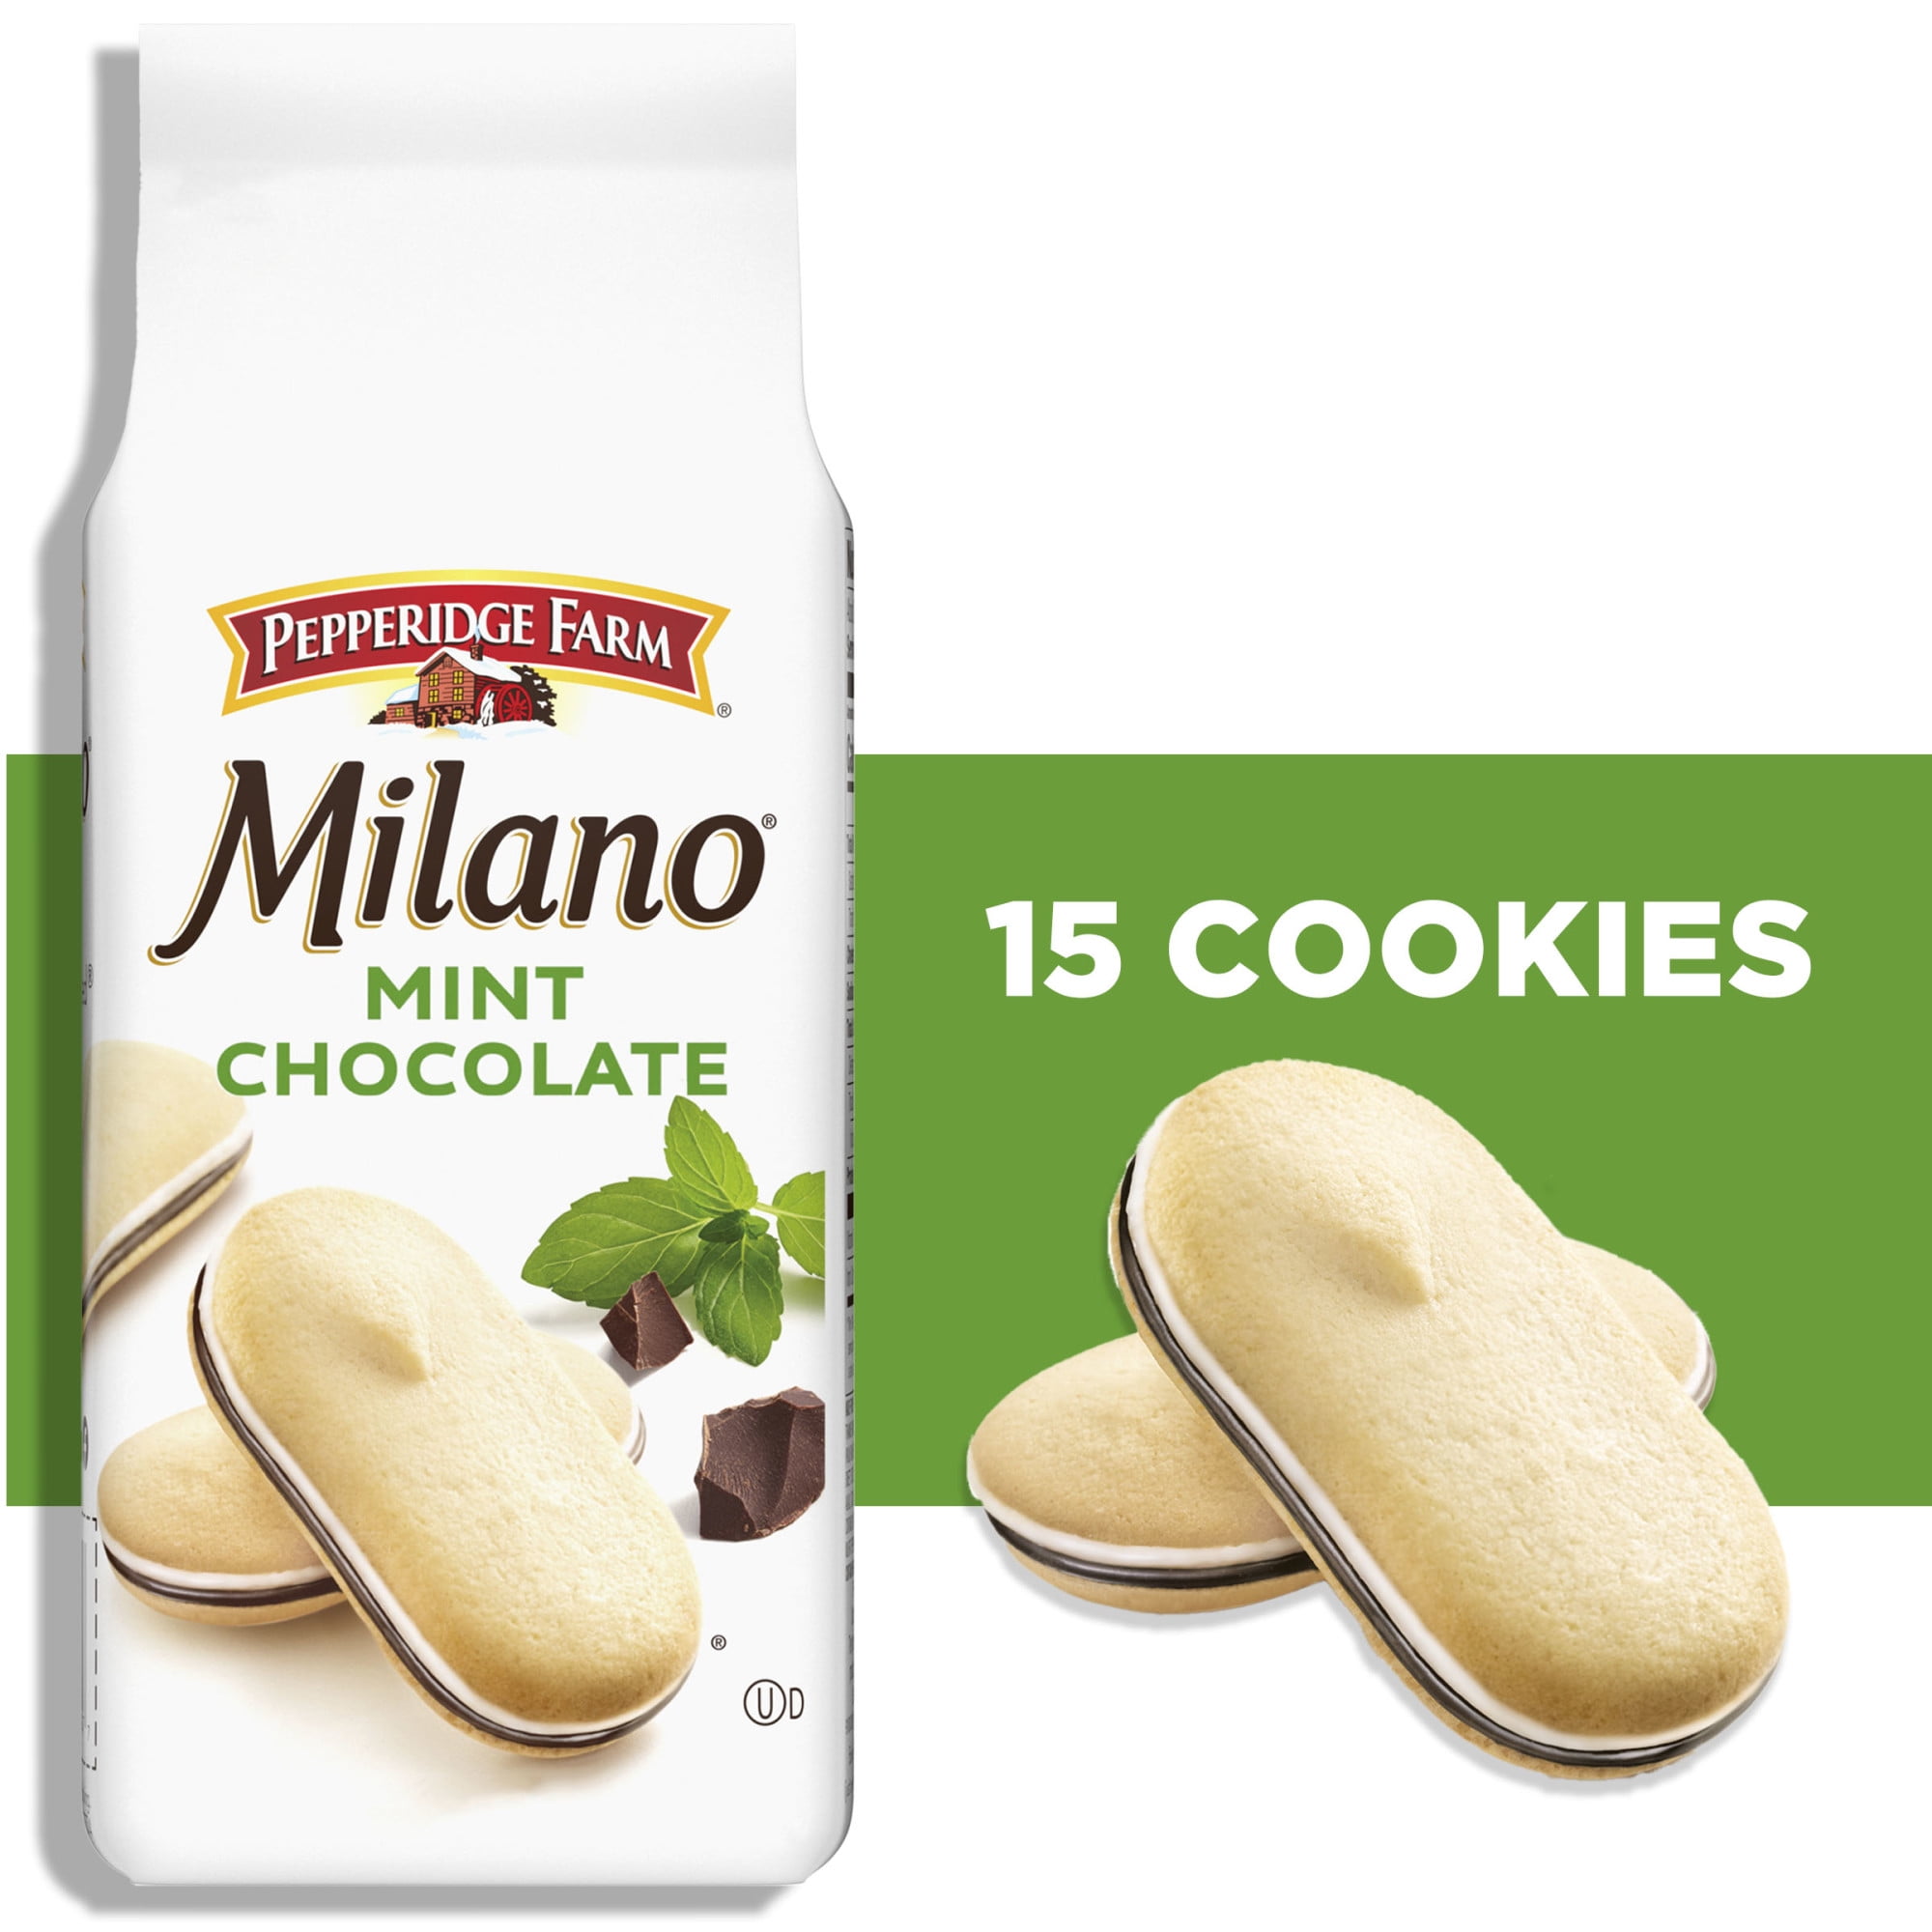 Pepperidge Farm Milano Mint Chocolate Cookies, 7 OZ Bag (15 Cookies)